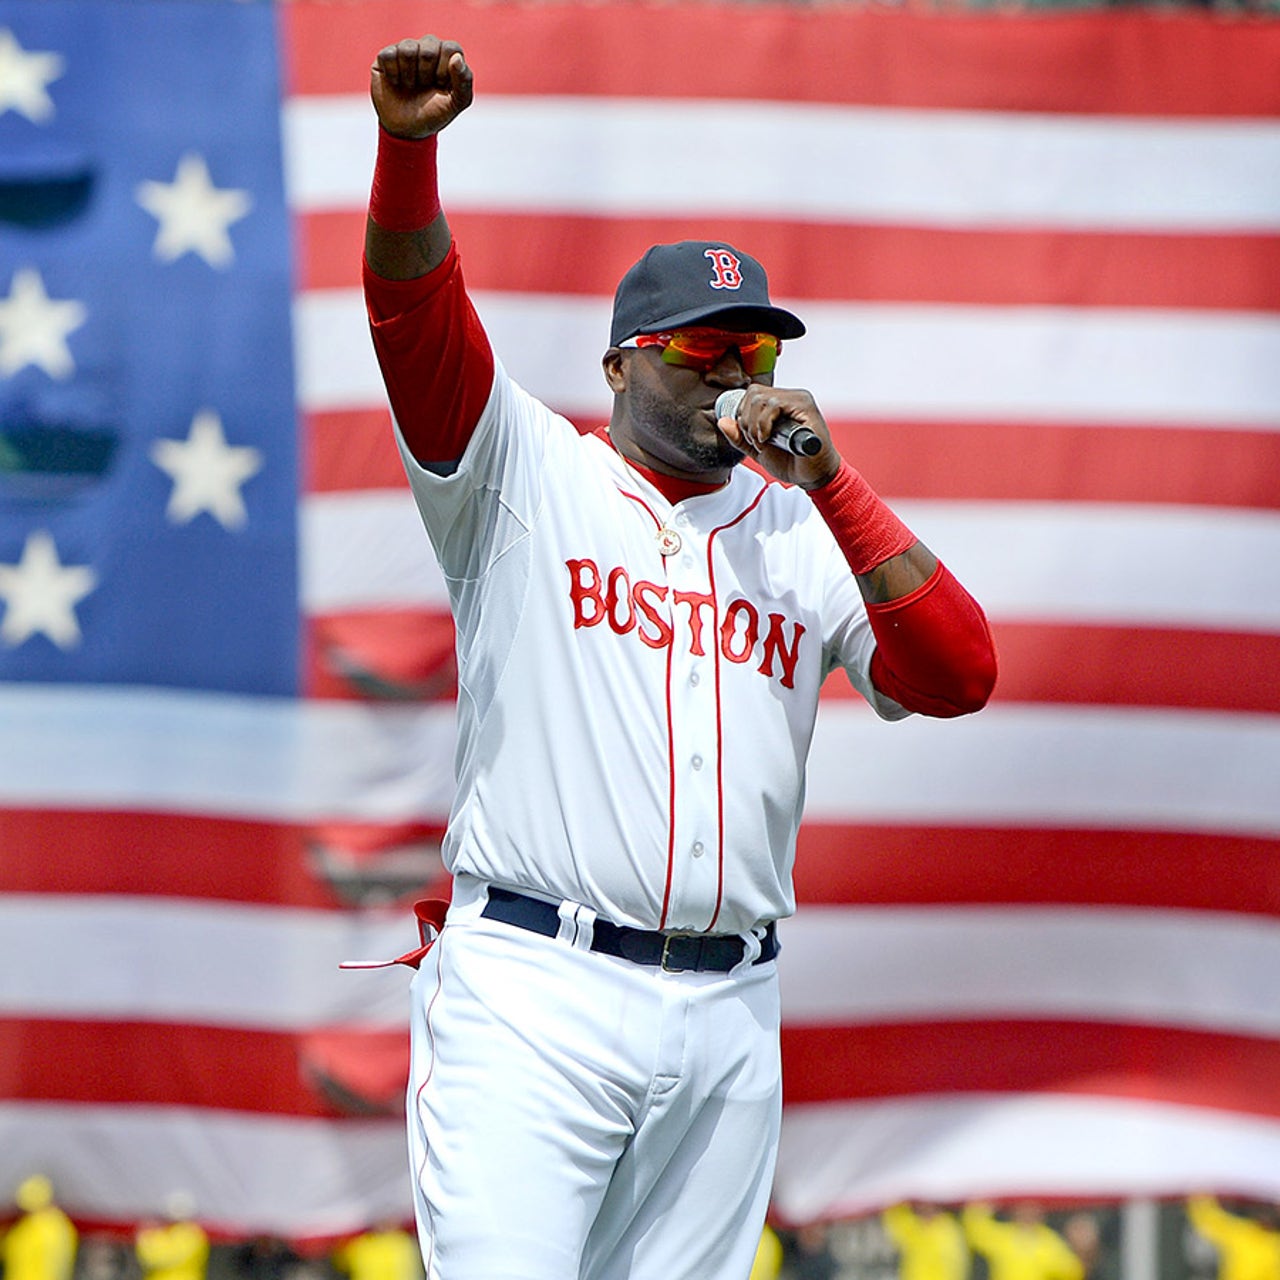 David Ortiz wants to visit Boston Marathon finish line after Patriots' Day  game